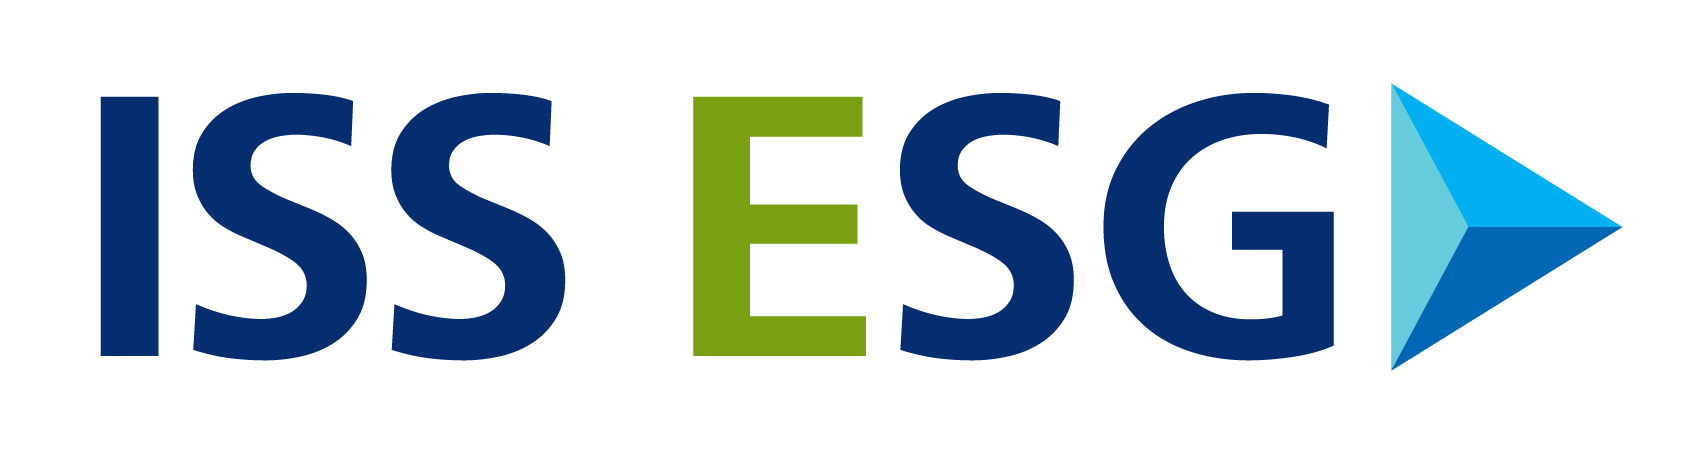 Esg 2024. ESG. ESG значок. ESG проекты. Логотипы ЕСГ.